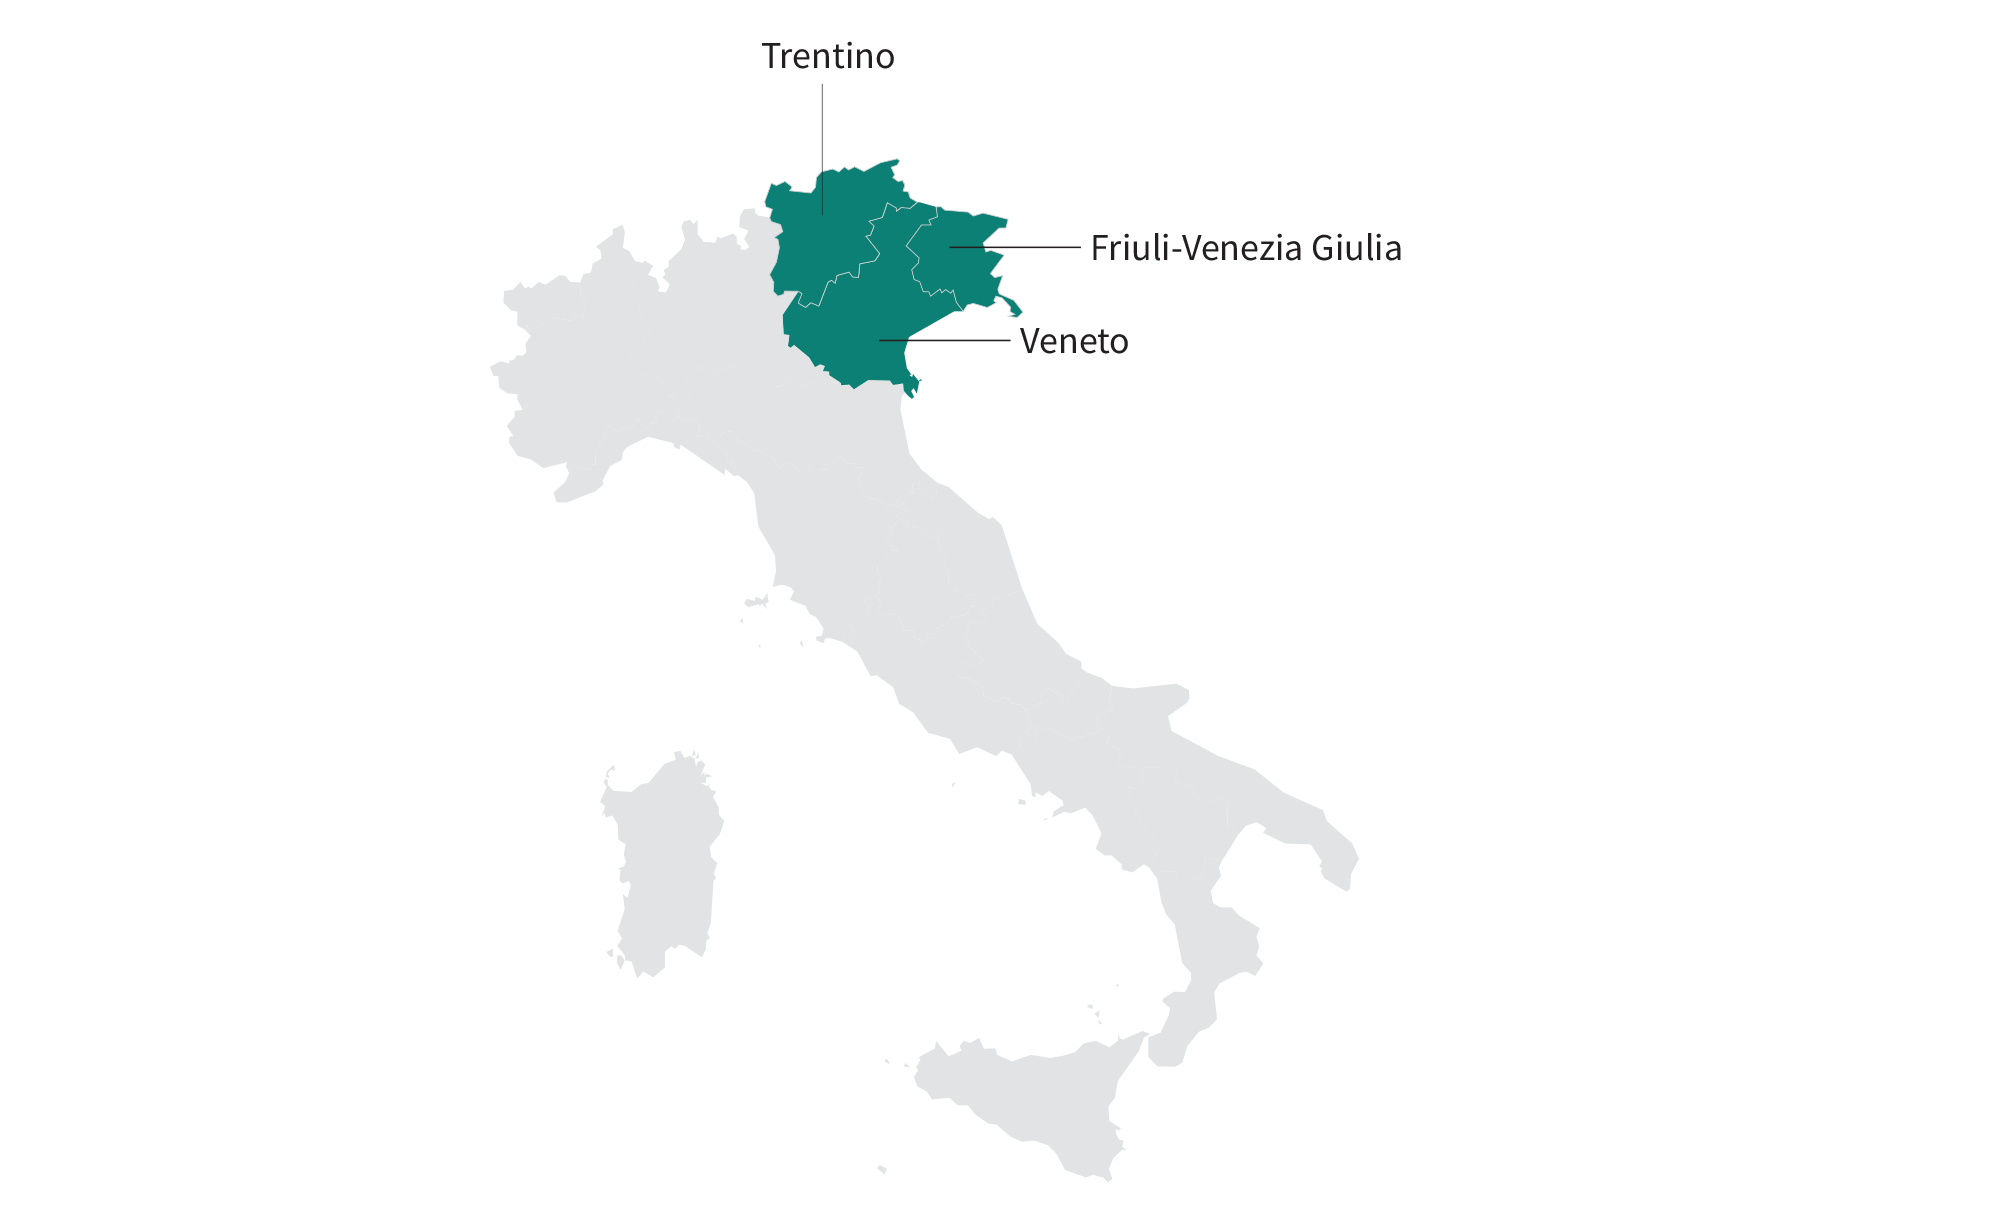 Pinot Grigio Italian wine regions: Trentino, Fruili-Venezia Giulia, Veneto